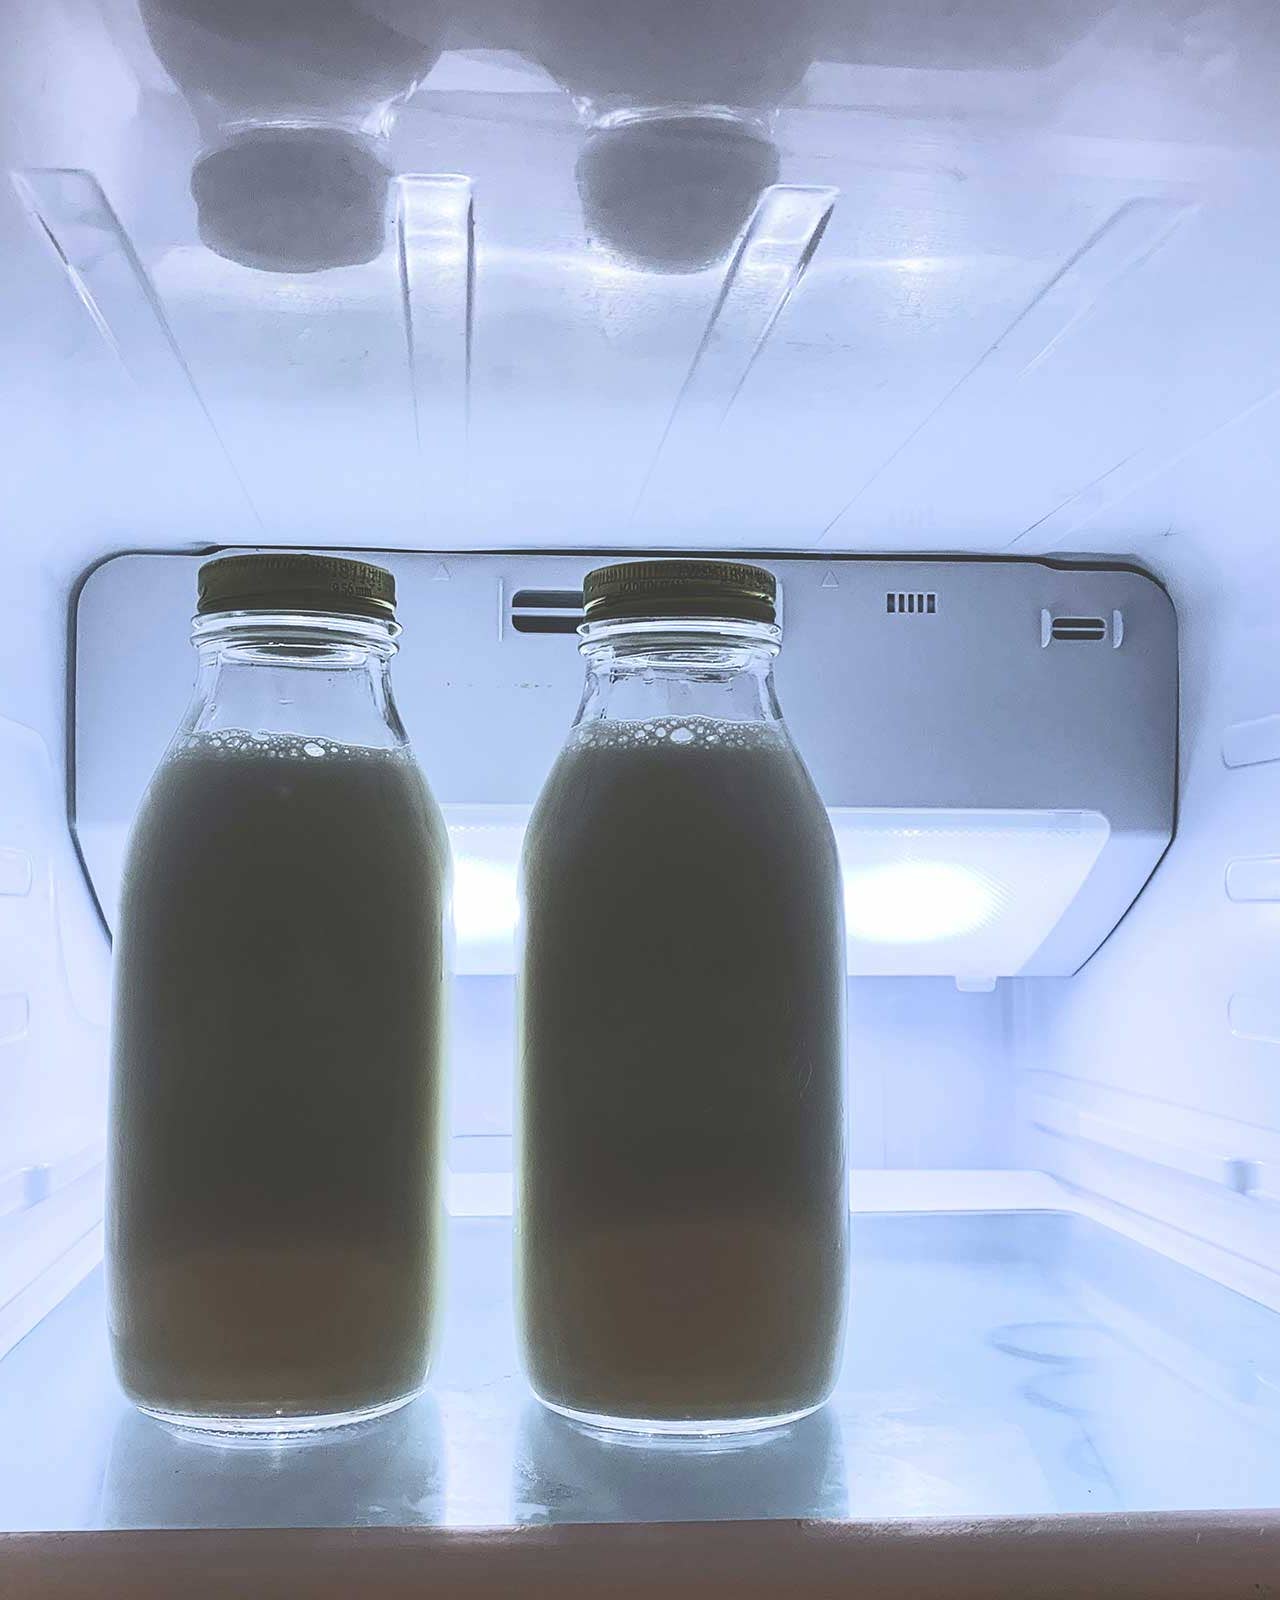 Bottles of milk in a refrigerator